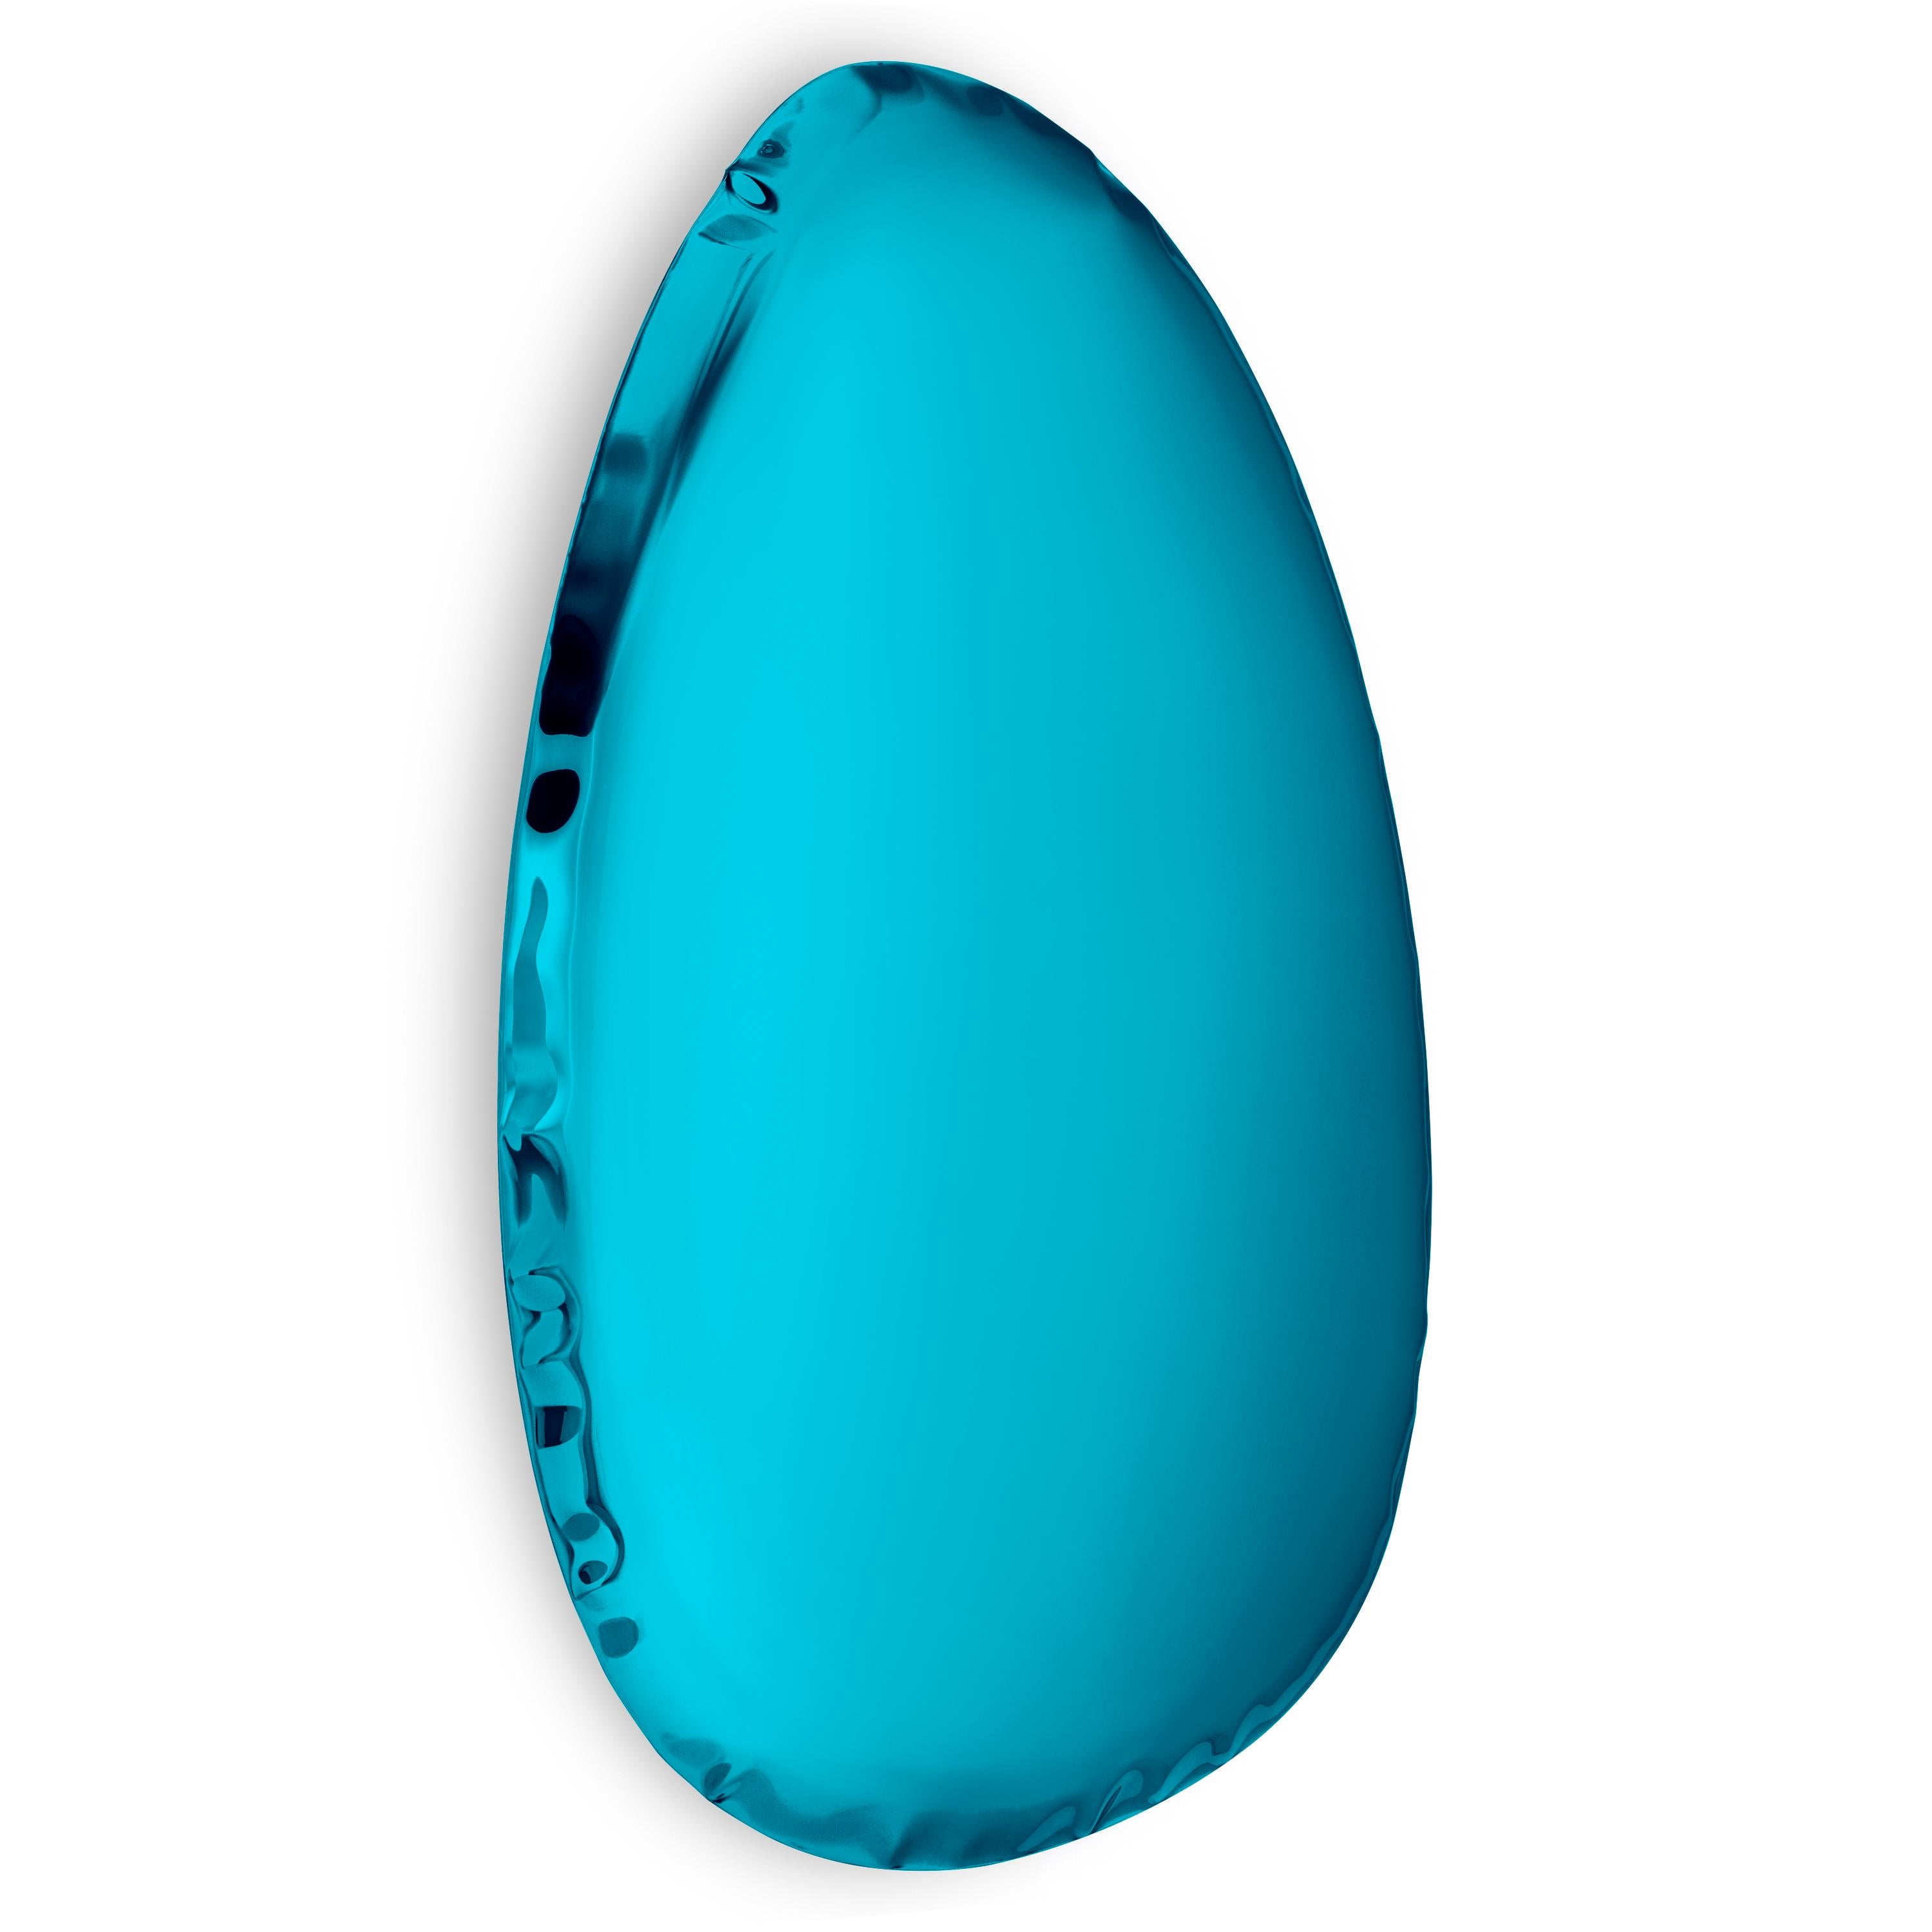 Sapphire Tafla O4.5 Wall Mirror by Zieta
Dimensions: D 6 x W 57 x H 86 cm 
Material: Stainless steel.
Finish: Sapphire.
Available finishes: Stainless Steel, White Matt, Sapphire/Emerald, Sapphire, Emerald, Deep space blue, Dark matter, or red Rubin.